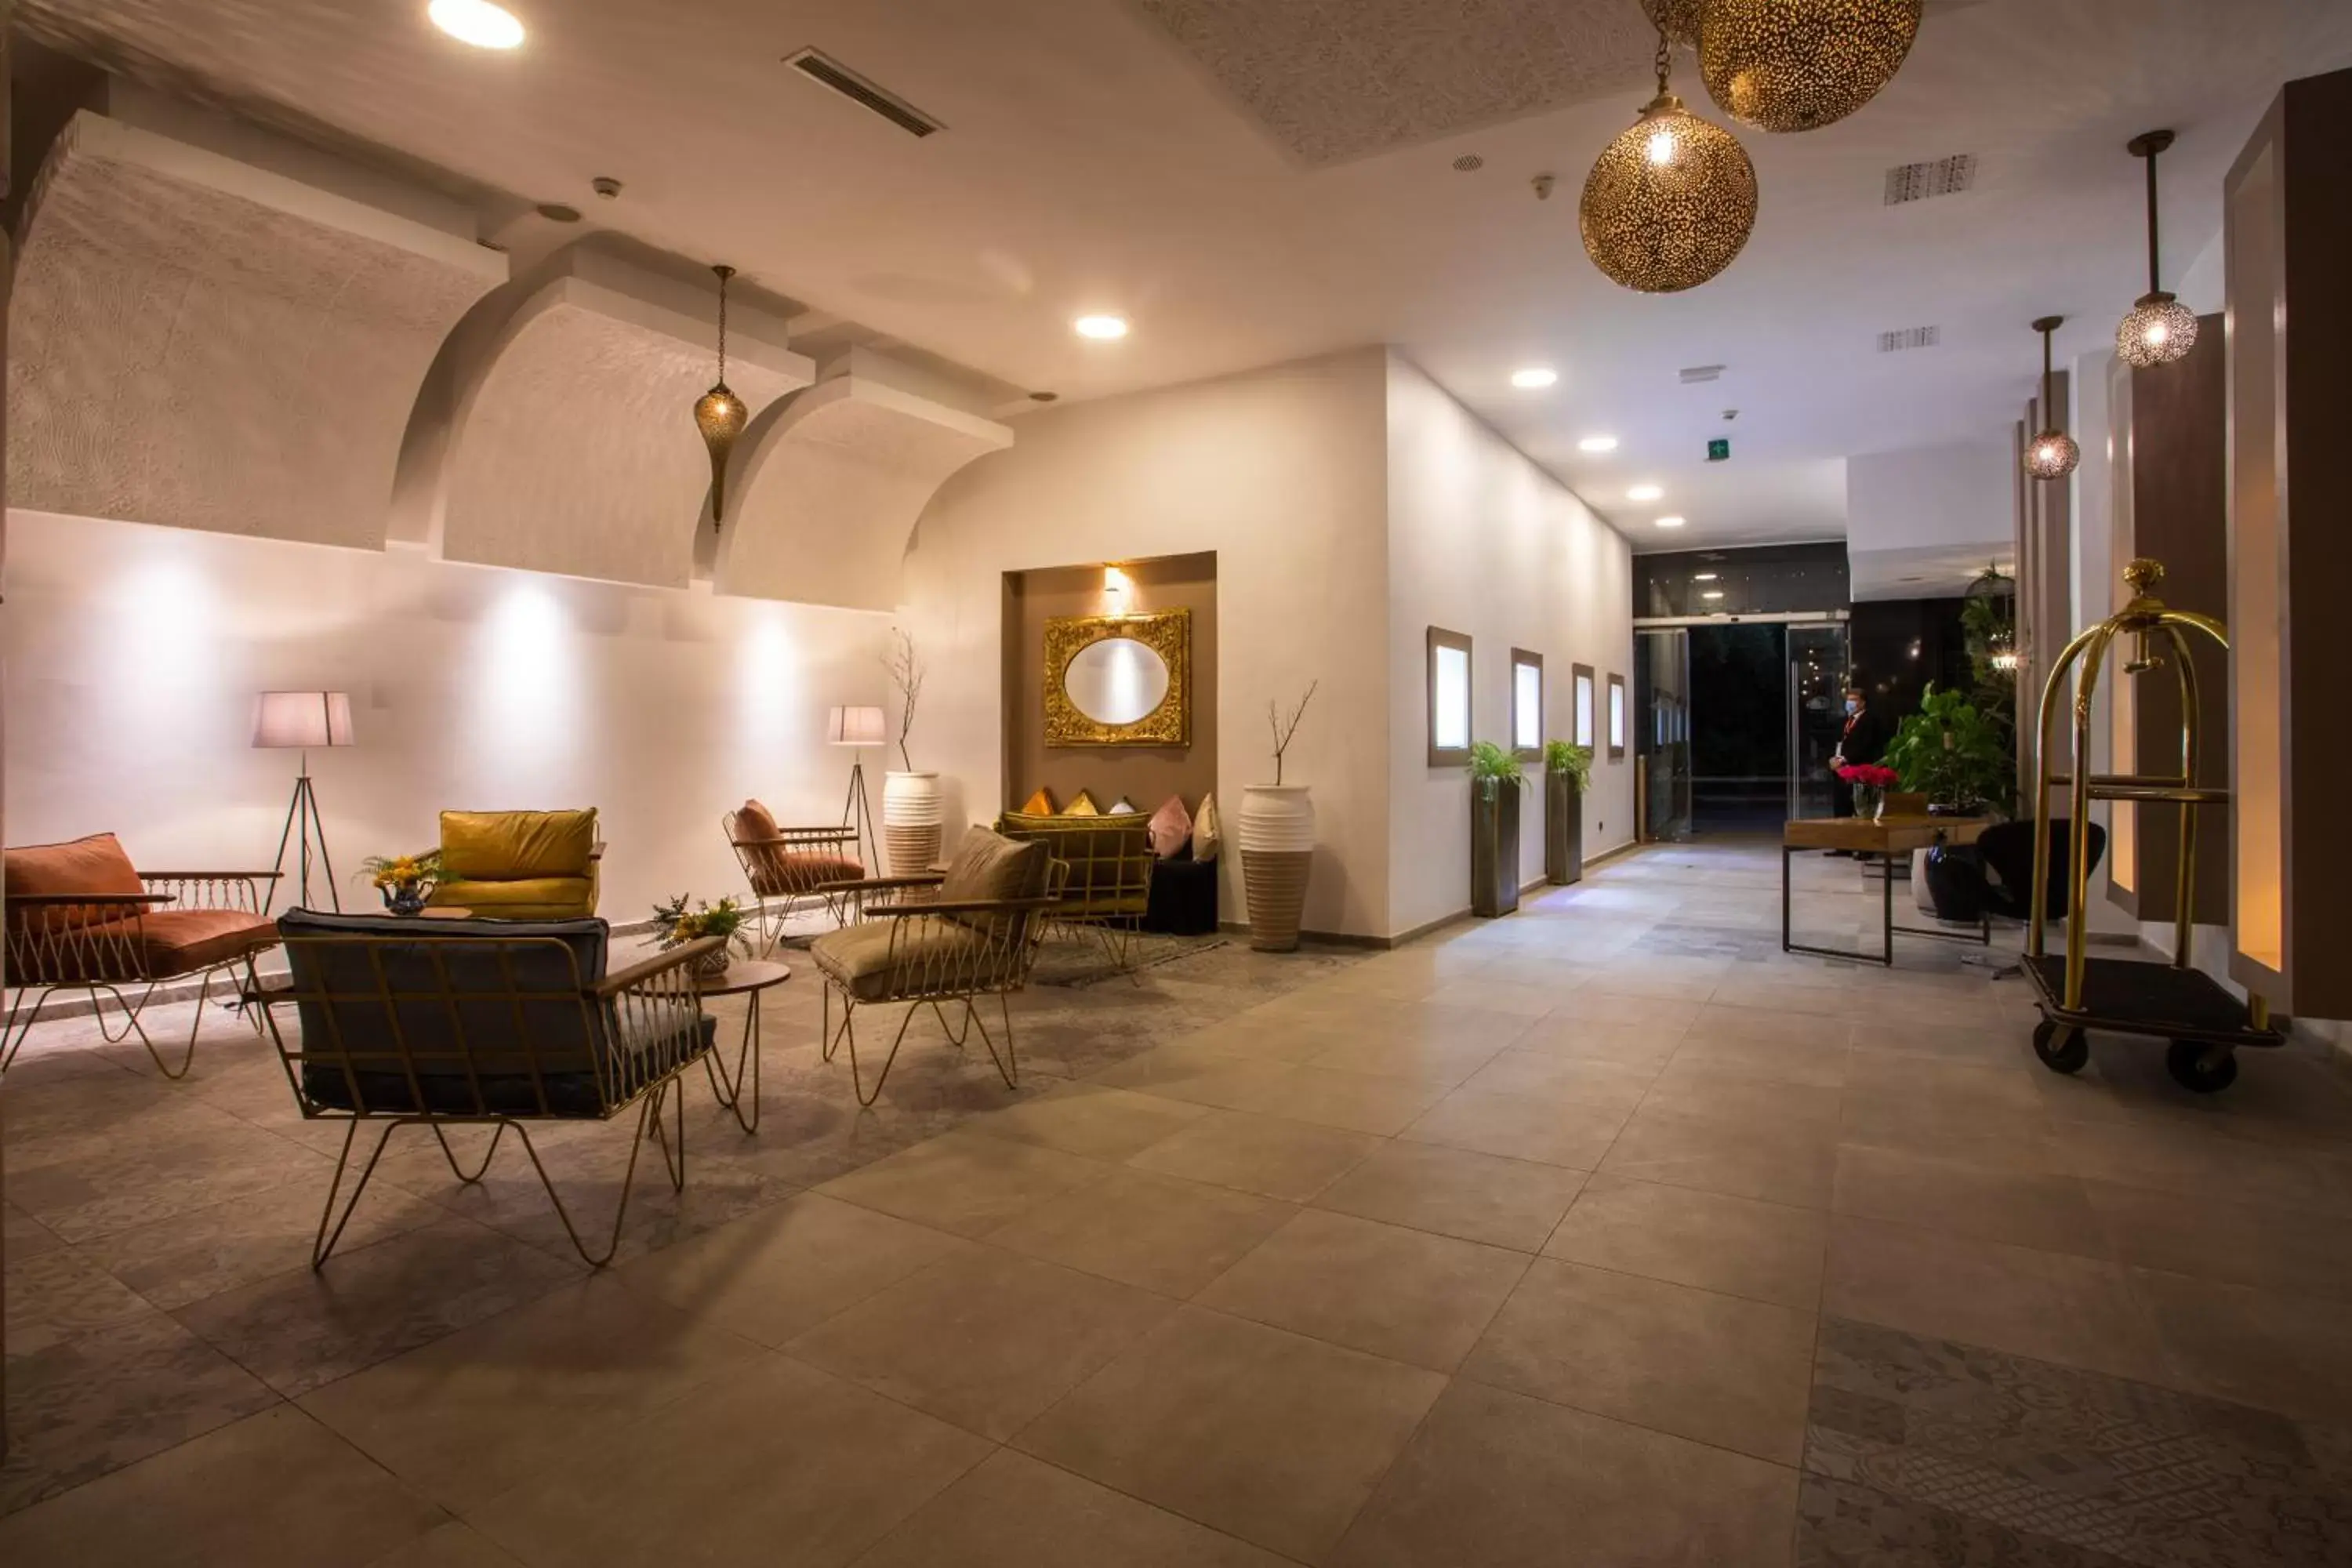 Lobby or reception in Dellarosa Boutique Hotel and Spa